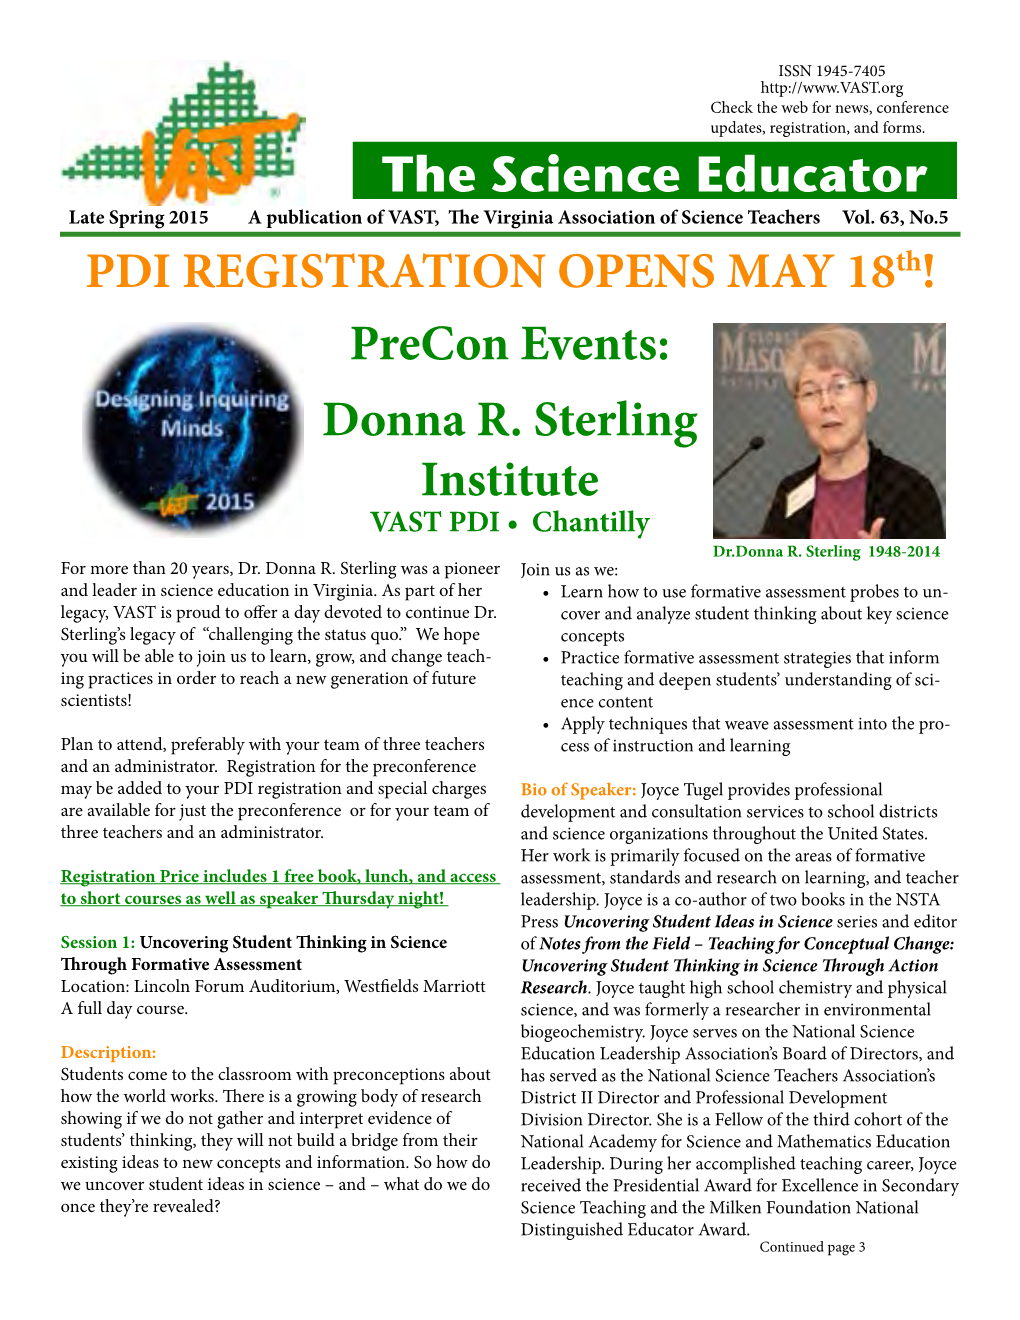 The Science Educator Precon Events: Donna R. Sterling Institute